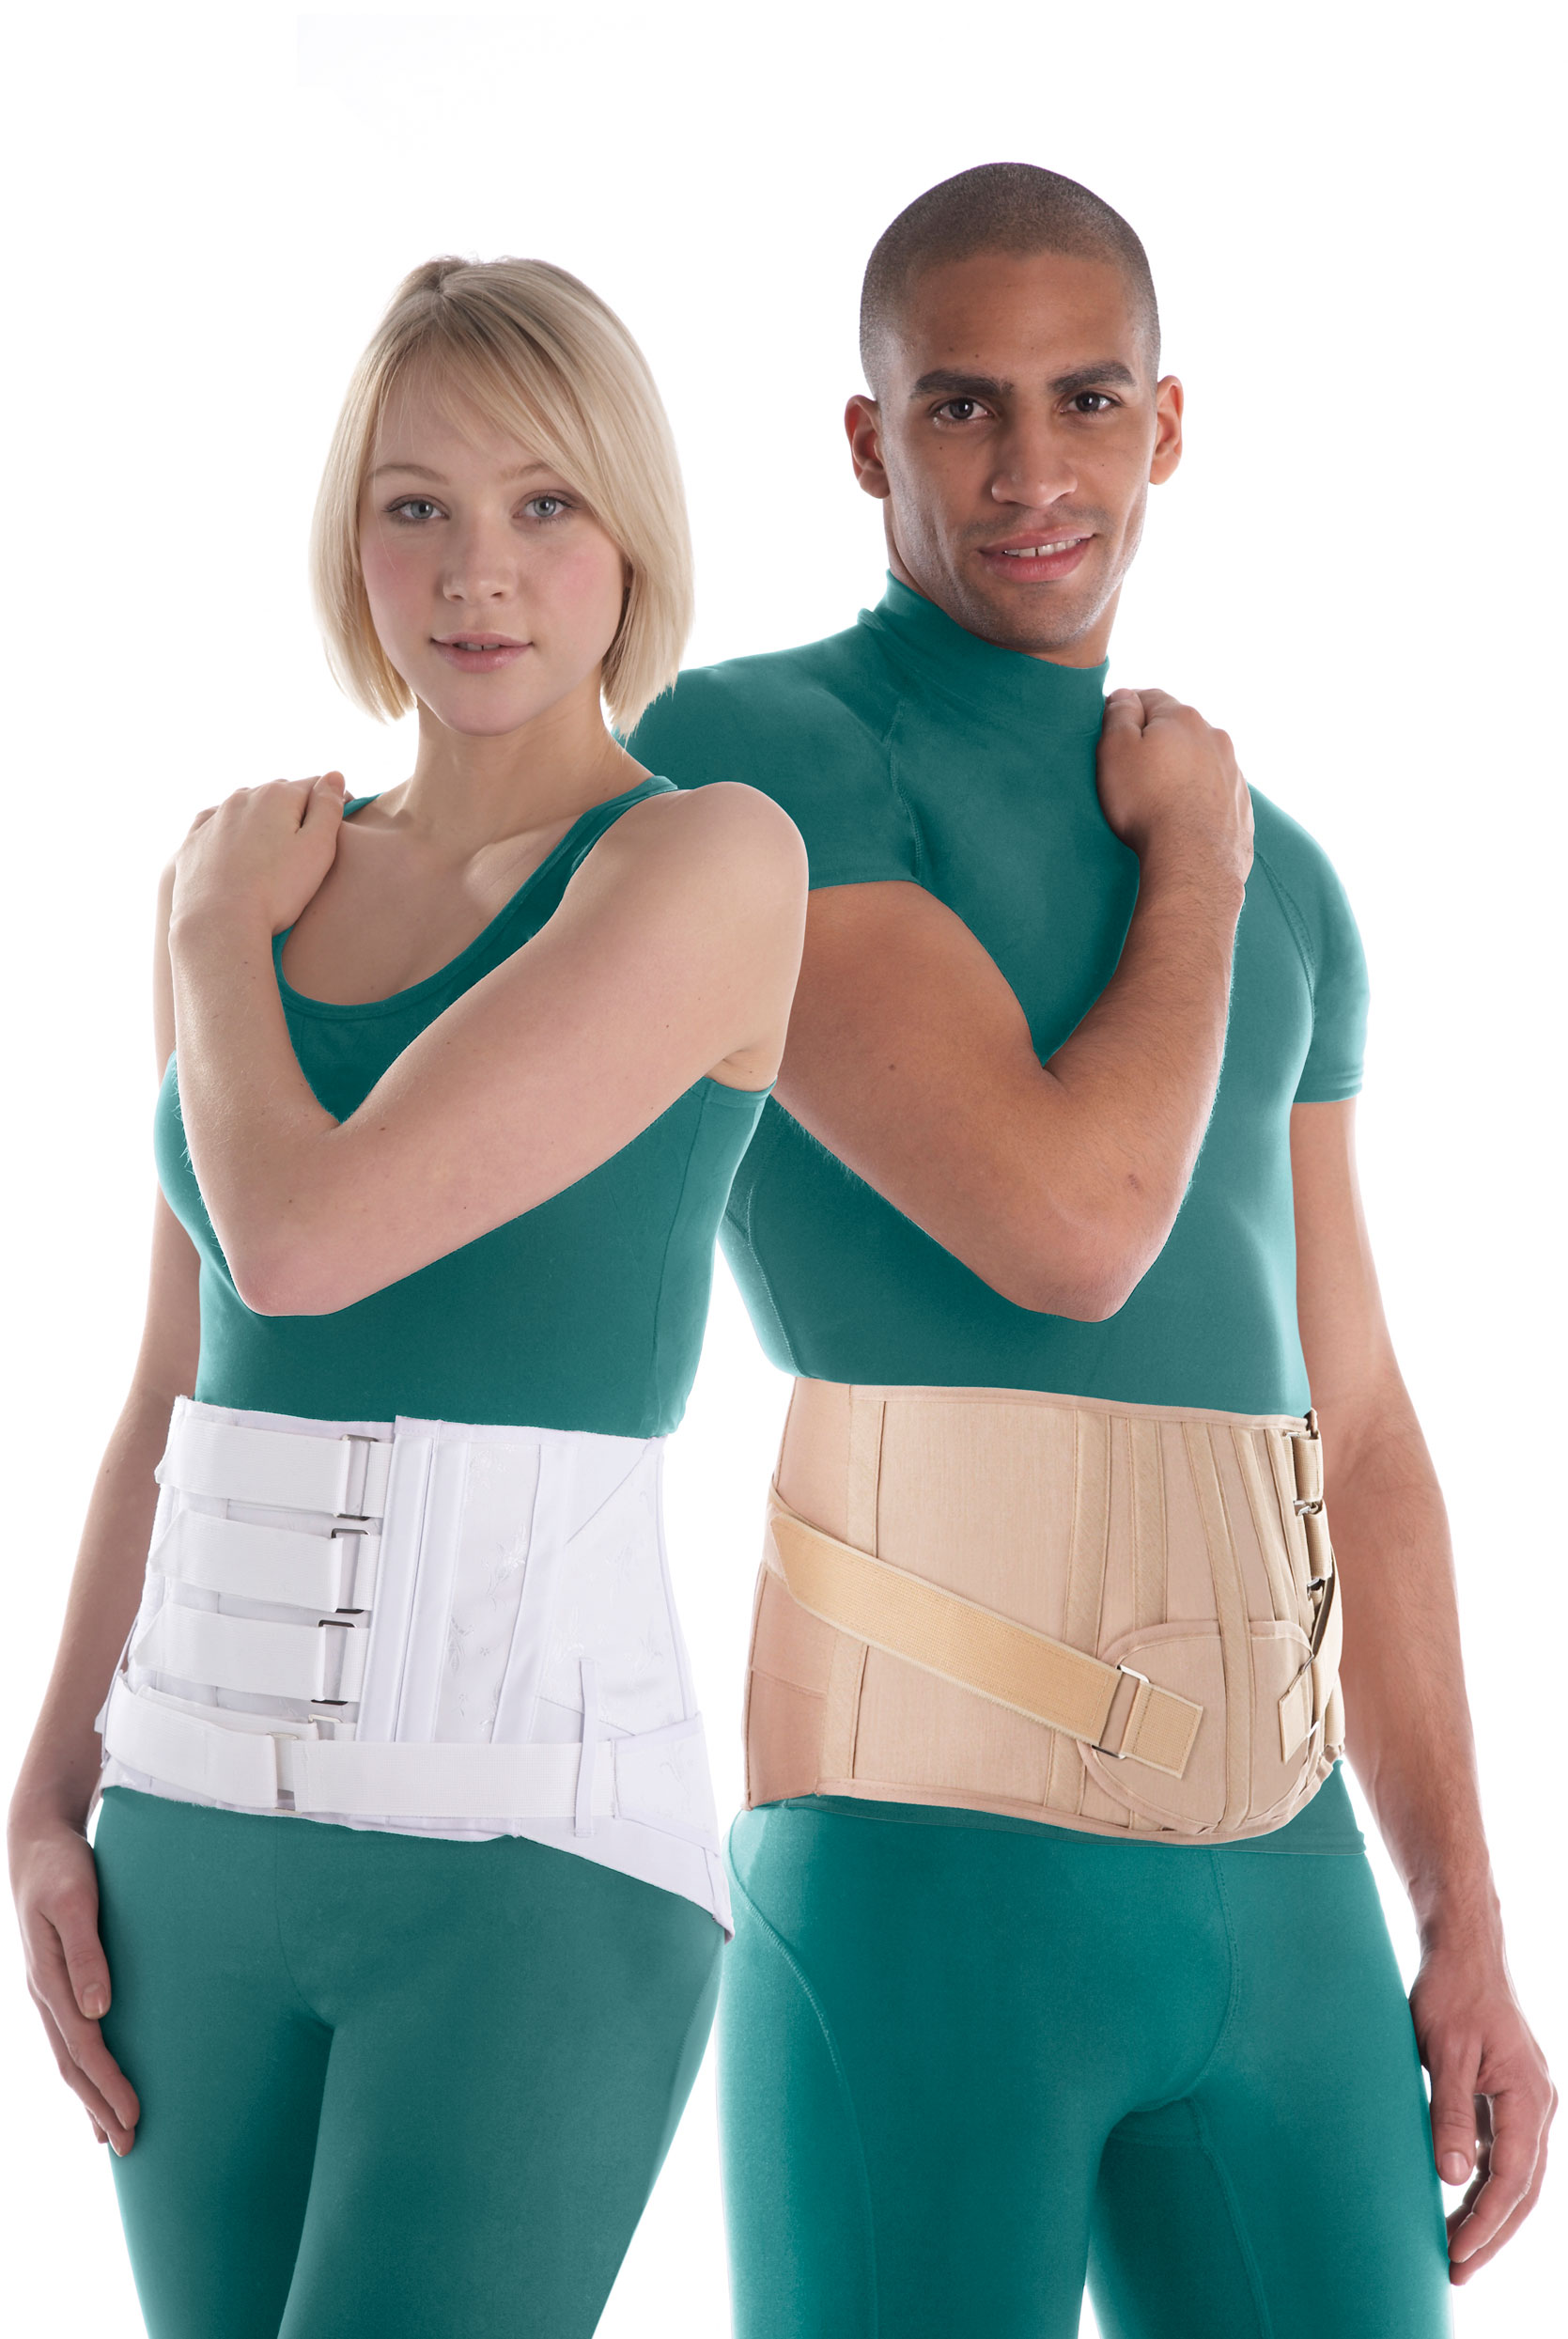 Lumbosacral and abdominal corsets